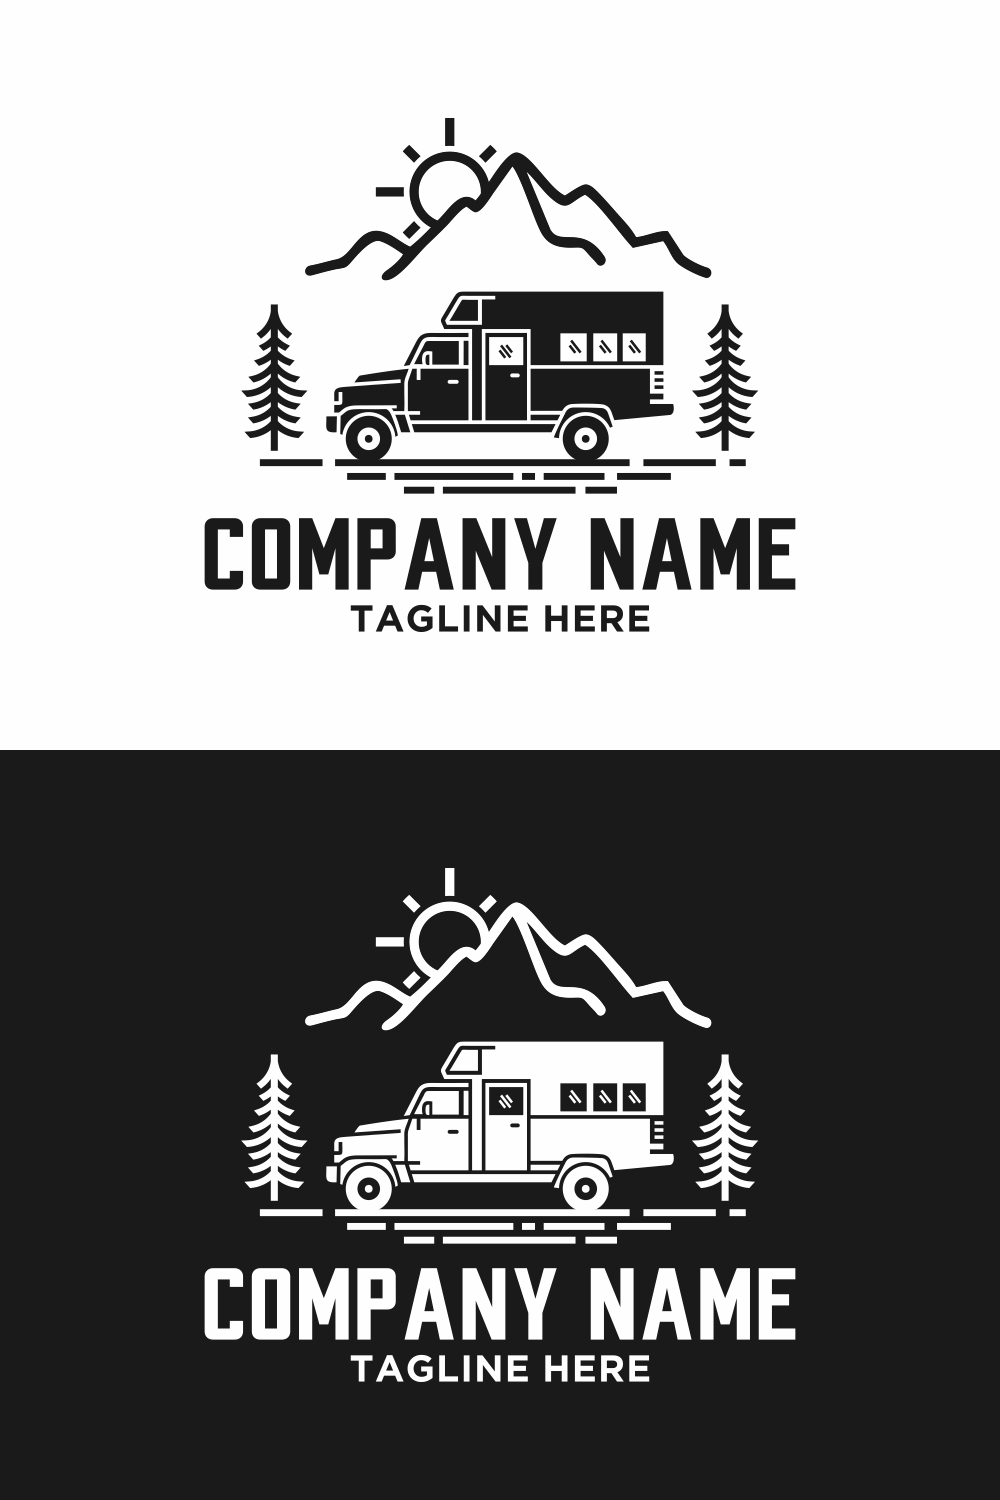 Adventure RV Camper Car Logo Design Template - only 8$ pinterest preview image.